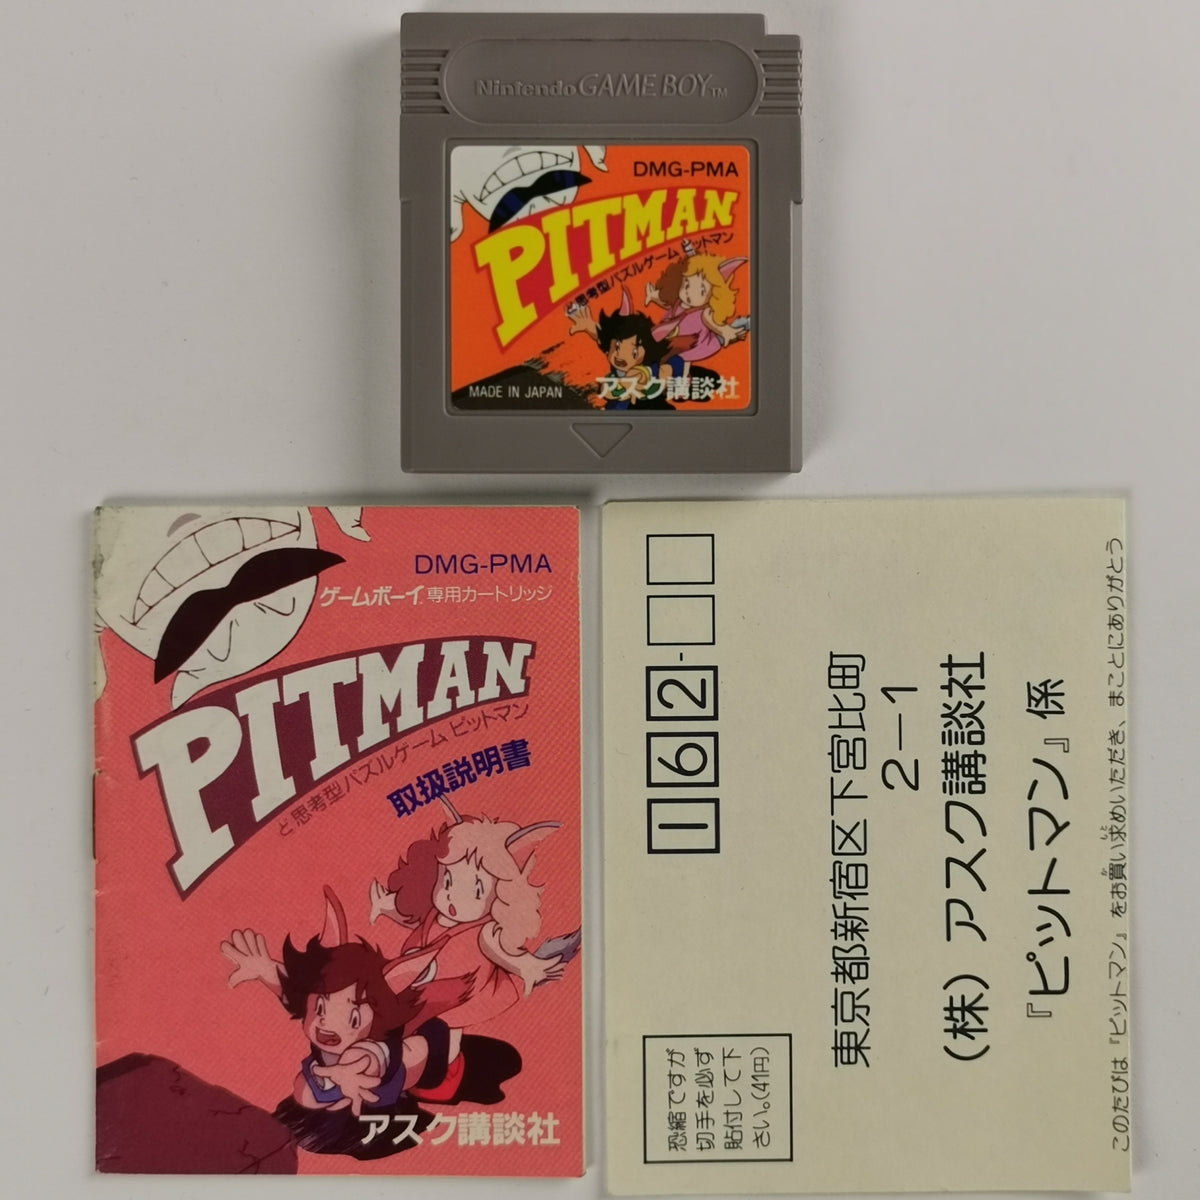 Pitman Game Boy Nintendo [GB]